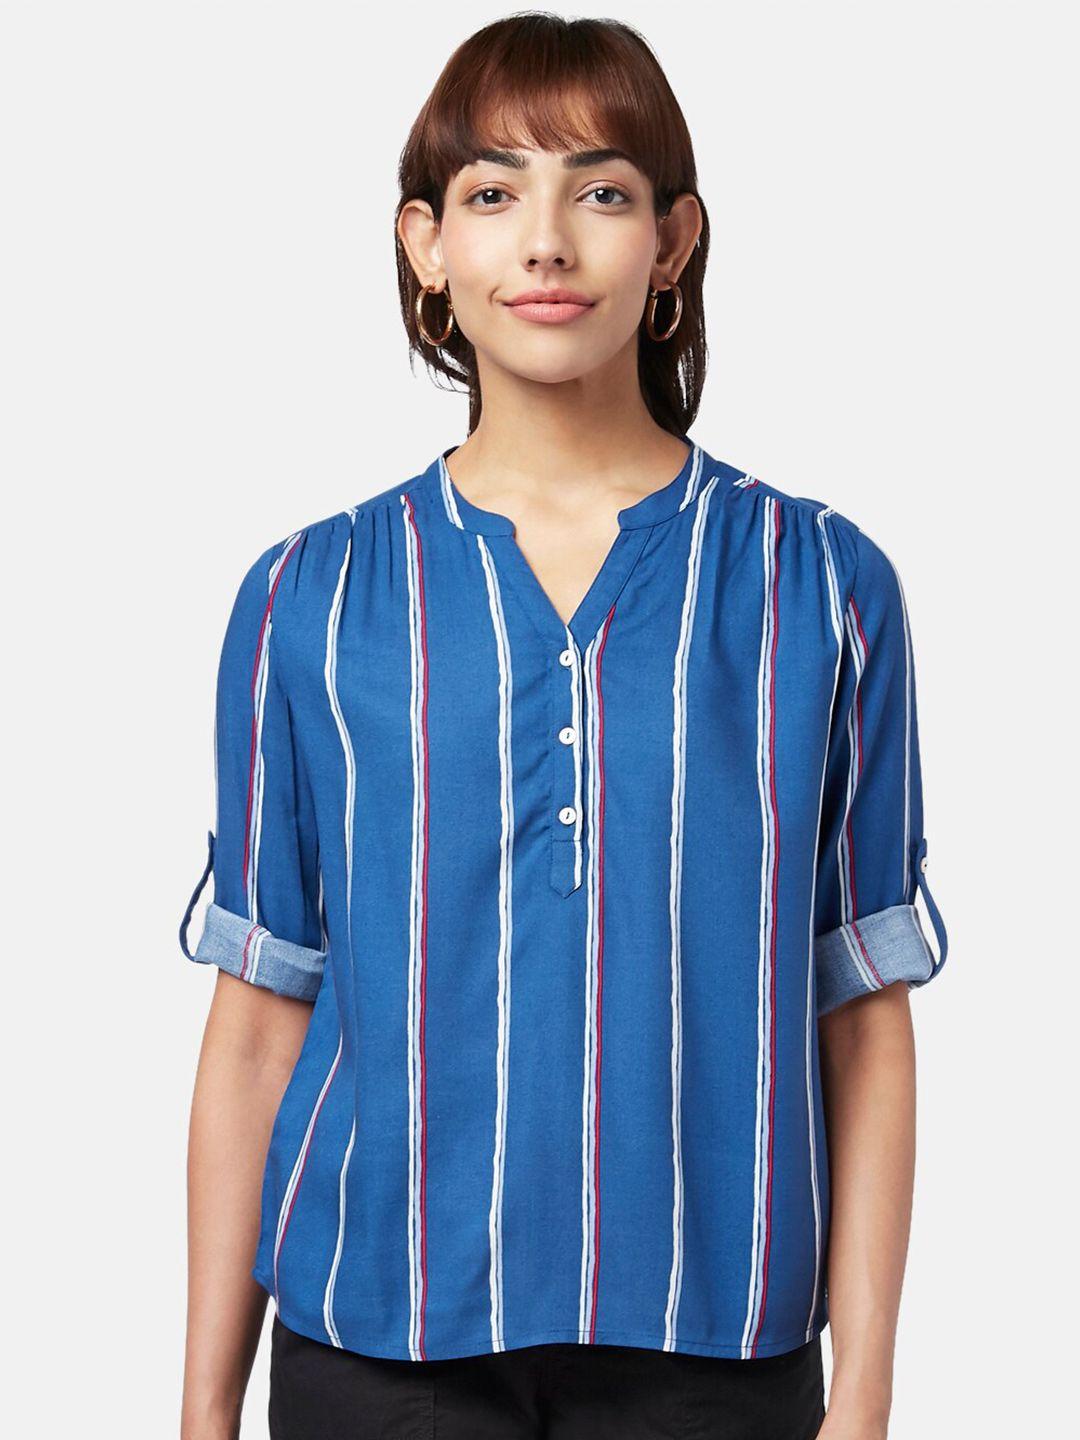 honey by pantaloons blue striped mandarin collar roll-up sleeves shirt style top